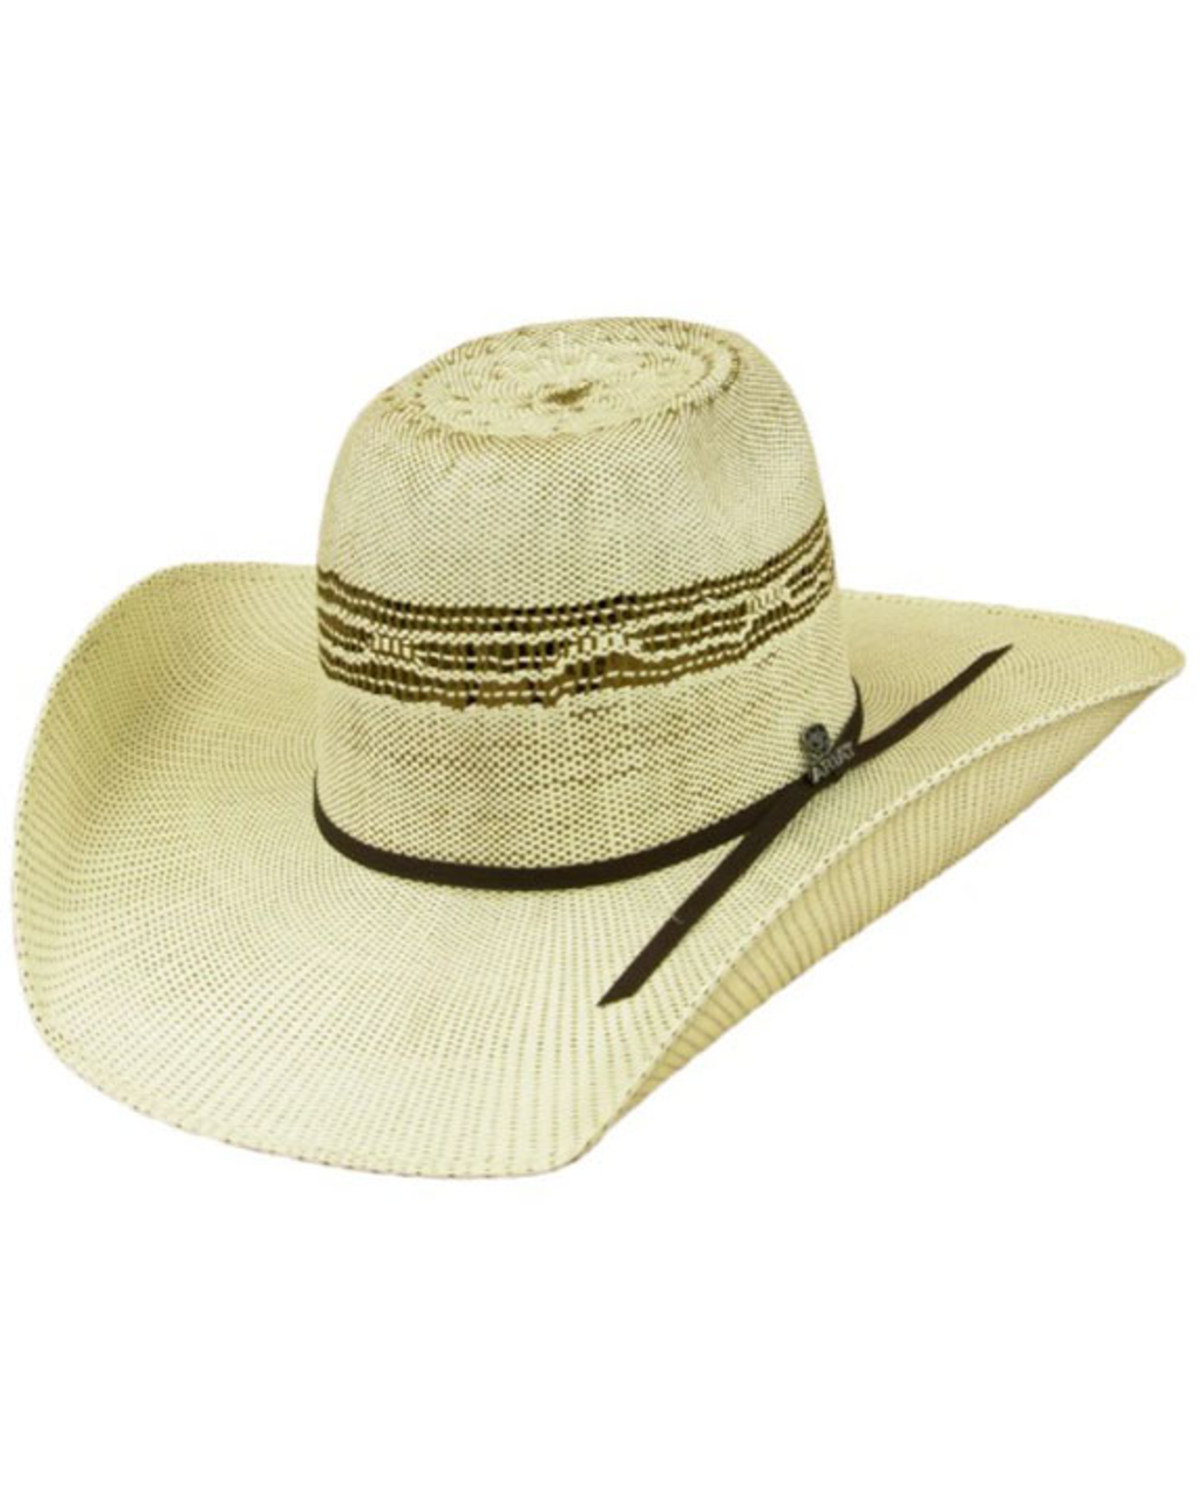 Ariat Tonal Straw Cowboy Hat